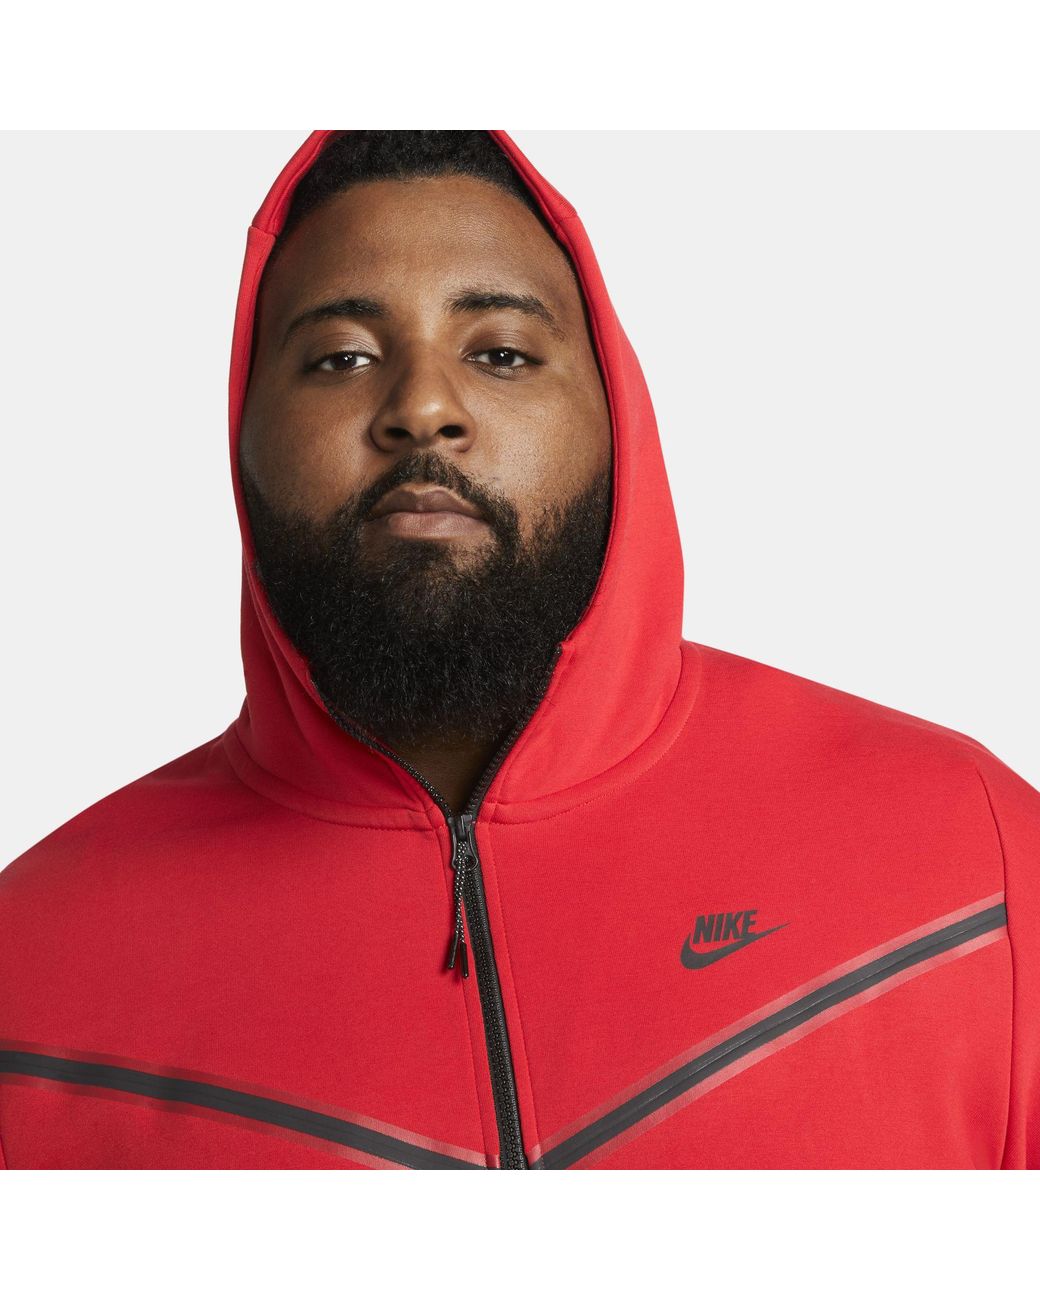 Nike Tech Fleece Jacket Red Cheap Sellers, Save 66% | jlcatj.gob.mx